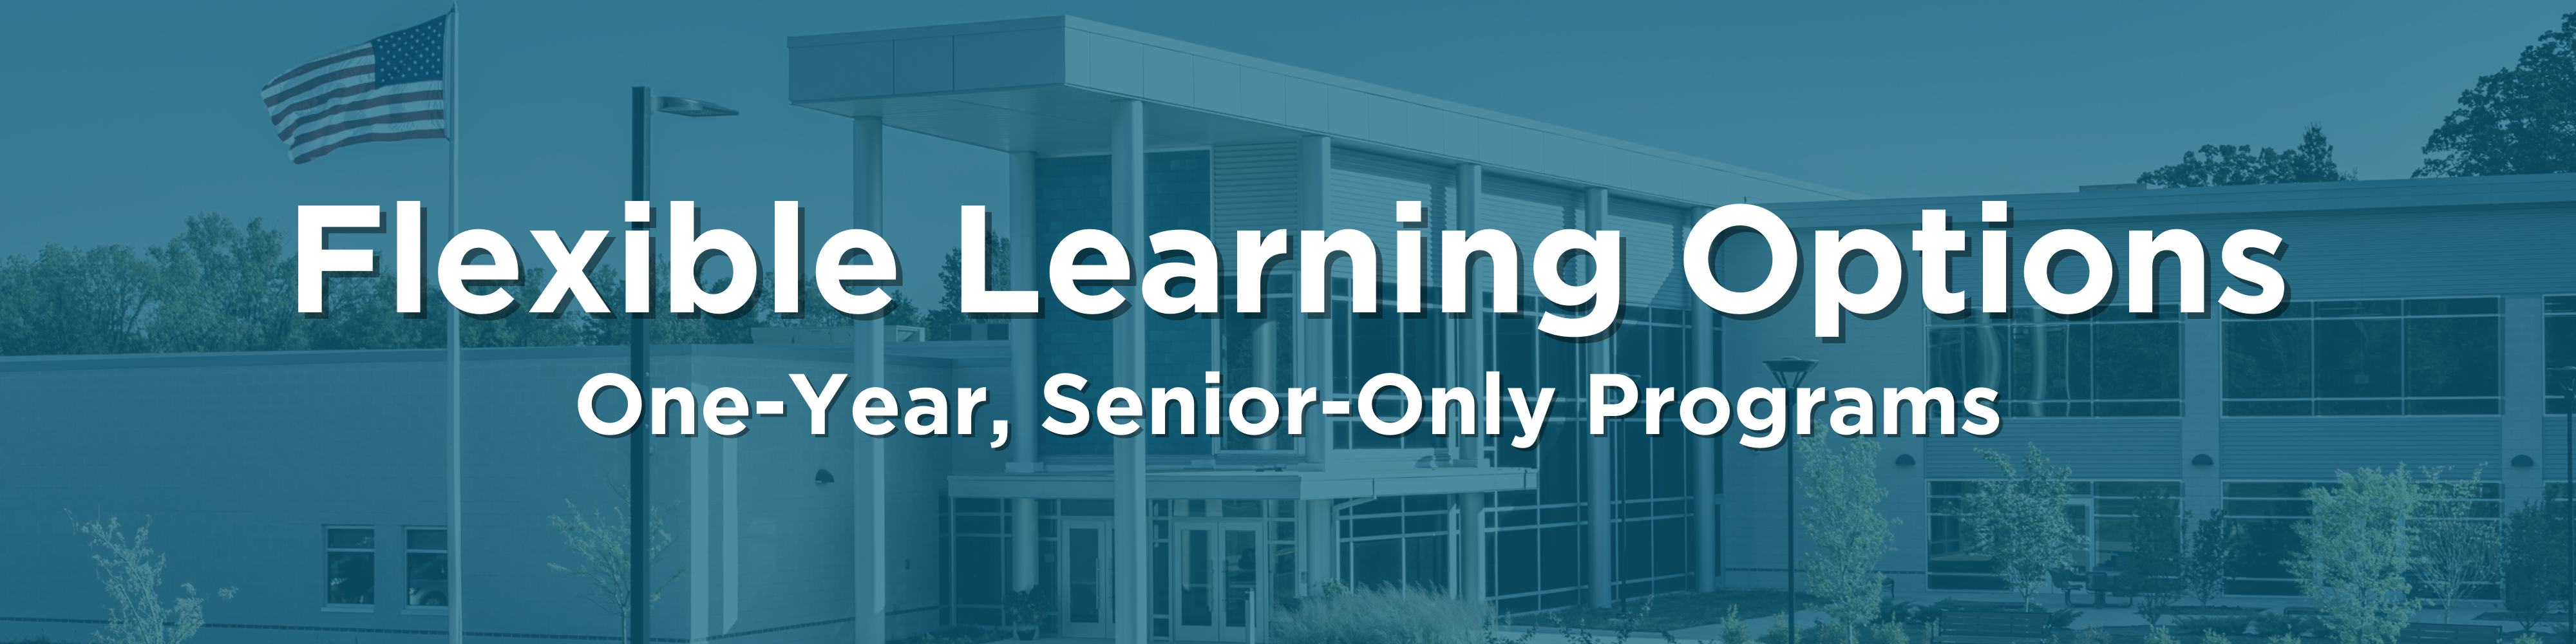 Flexible Learning Options - one-year, senior-only program